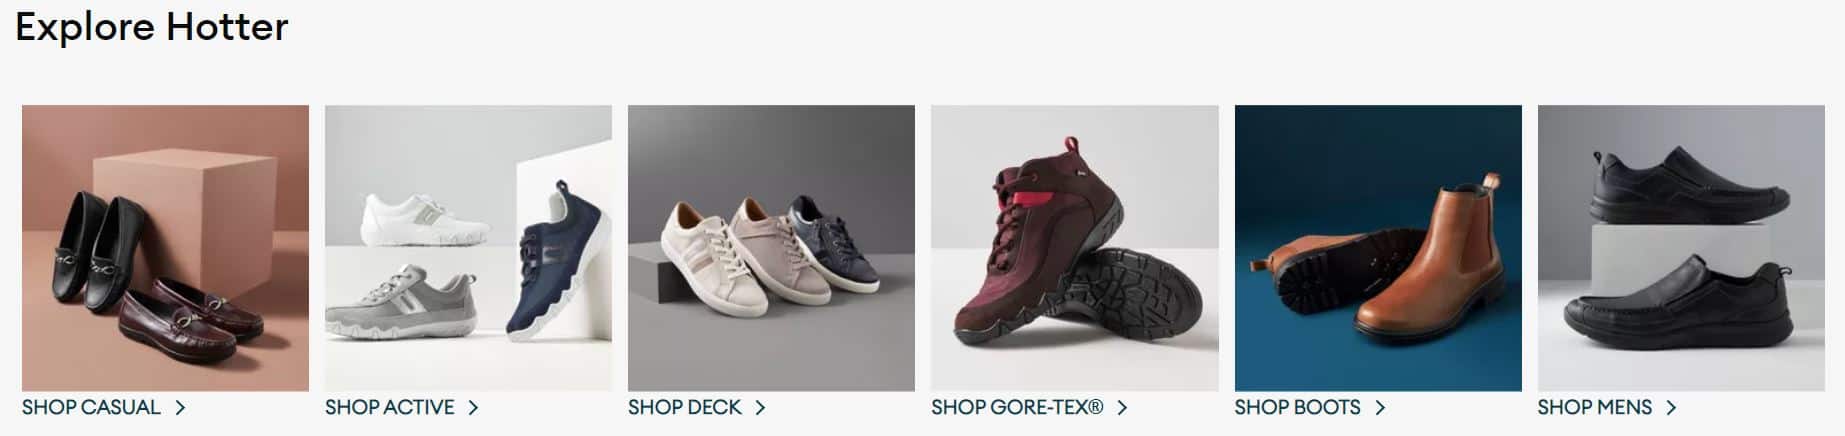 hotter shoes online shop